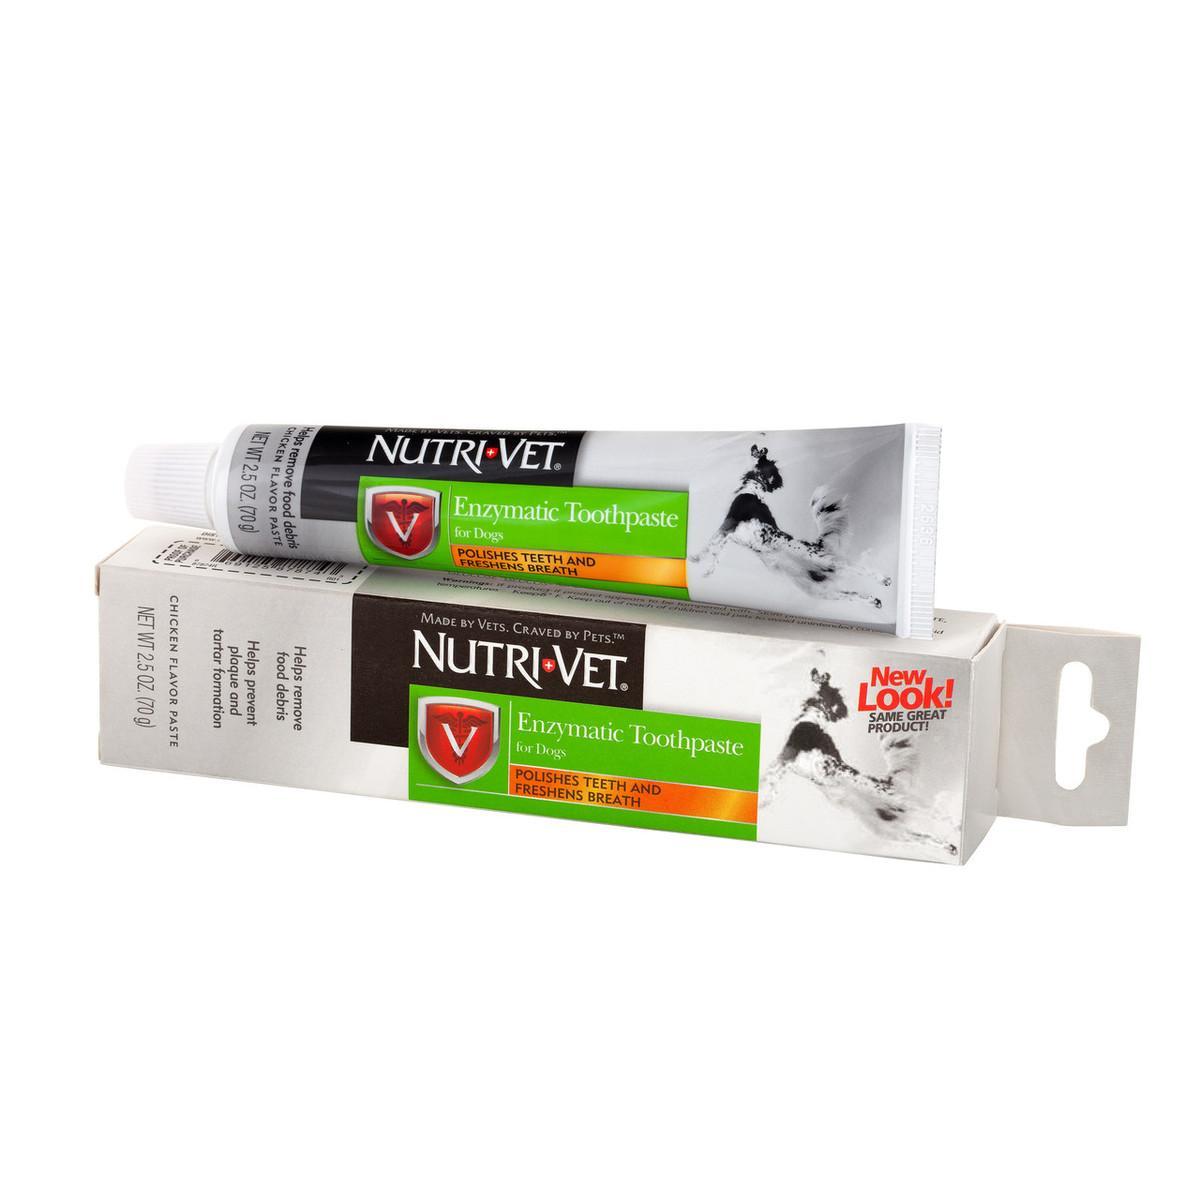 NutriVet Enzymatic Toothpaste 2.5oz